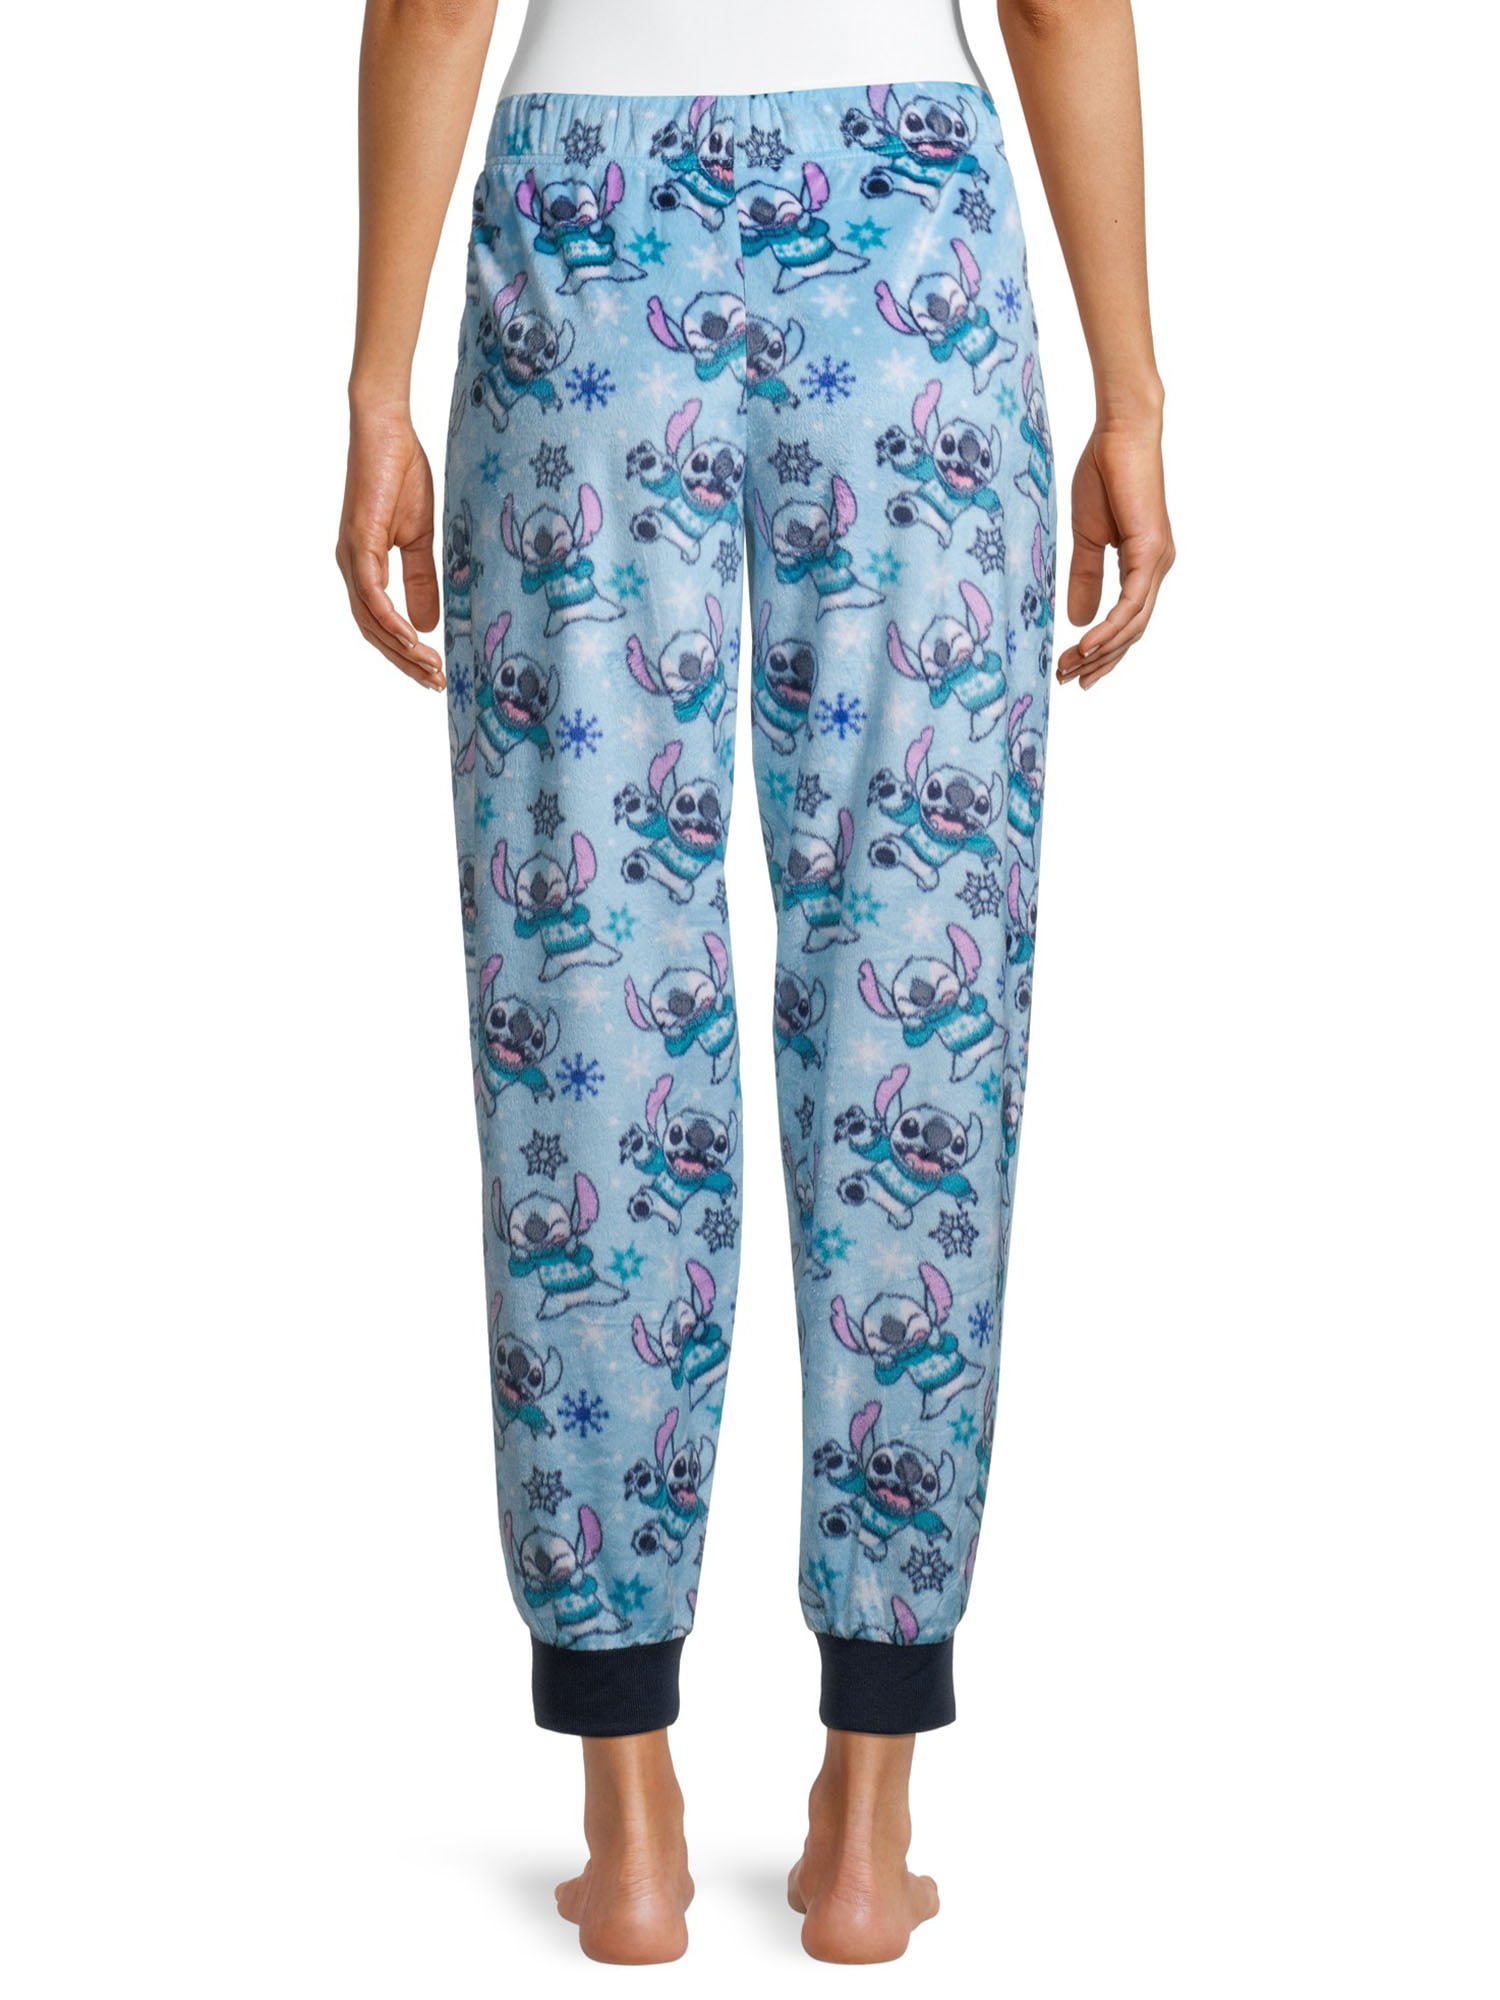 Disney Stitch Women's and Women's Plus Cuffed Pajama Pants